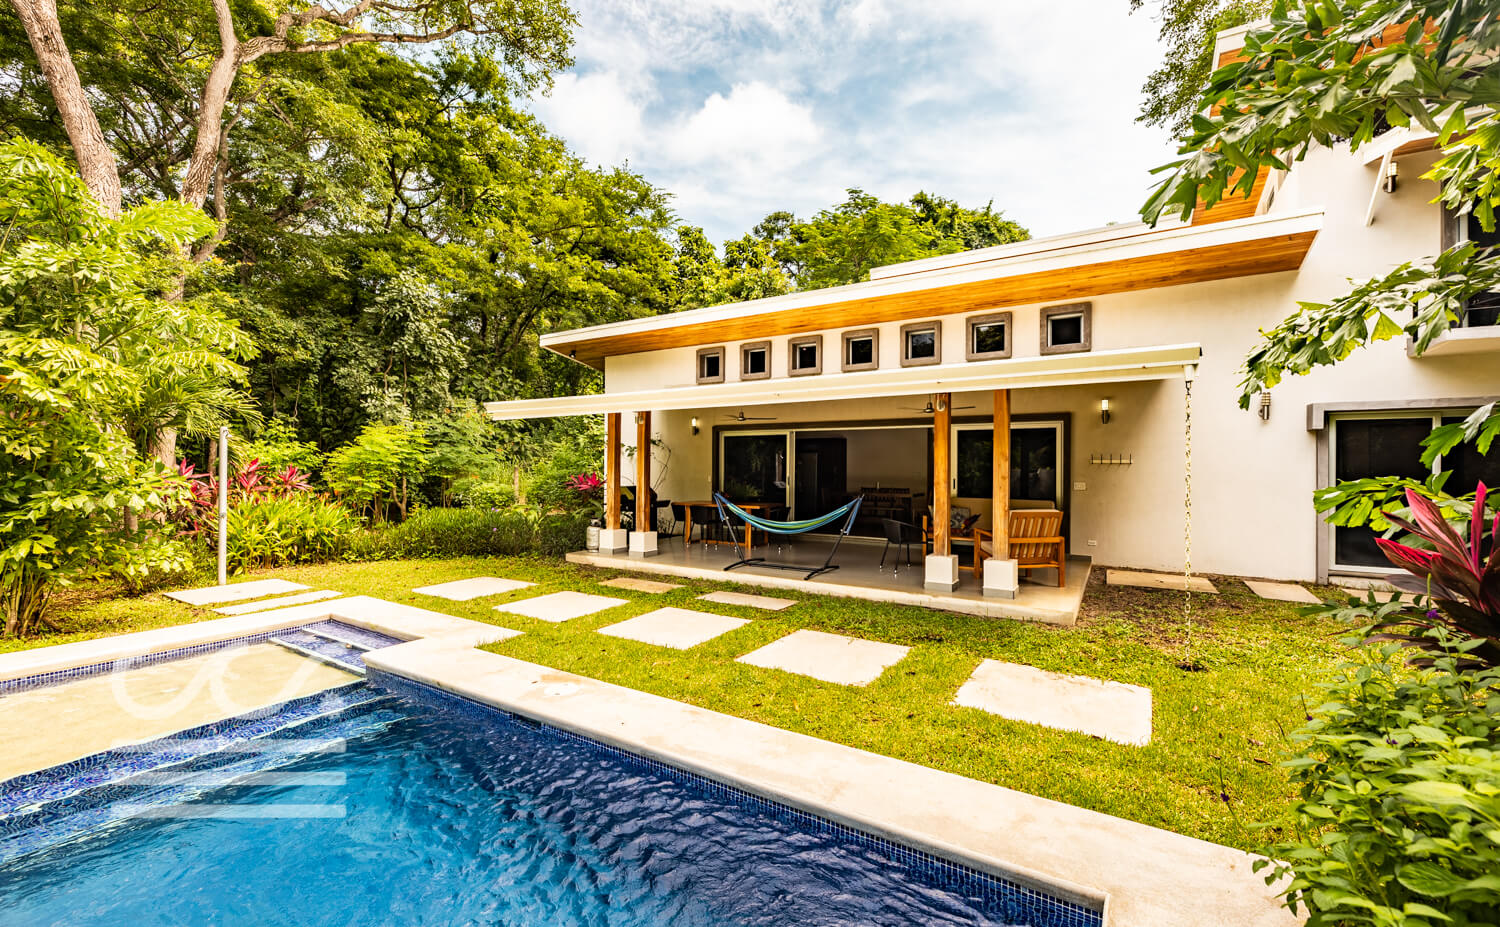 Casa-Perla-Wanderlust-Realty-Real-Estate-Rentals-Nosara-Costa-Rica-5.jpg